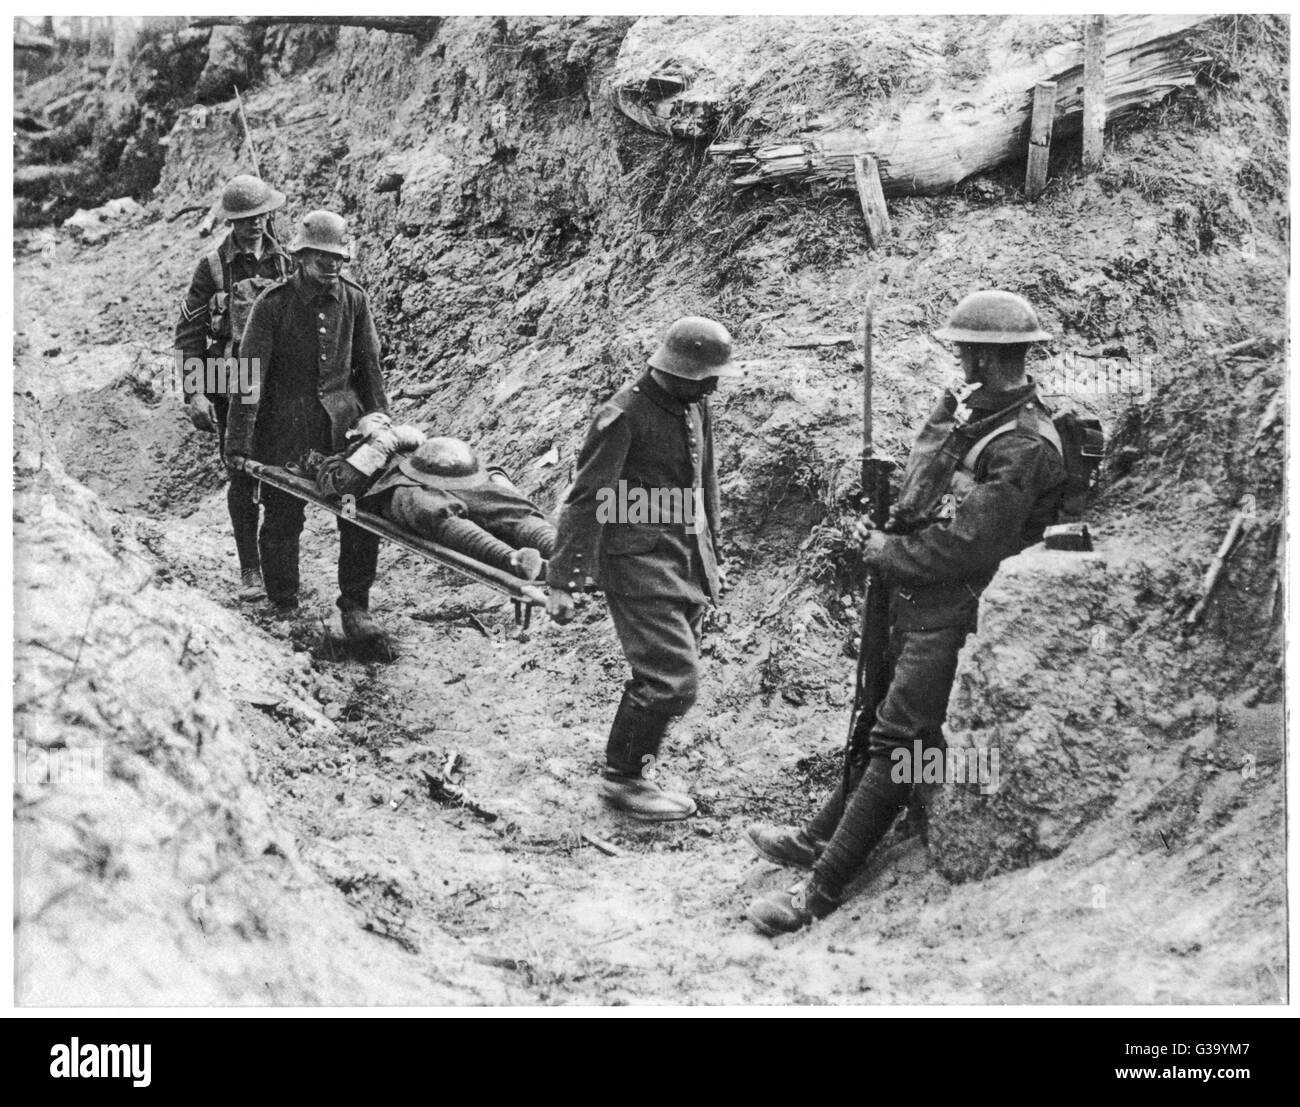 British stretchers ww1 Black and White Stock Photos & Images - Alamy